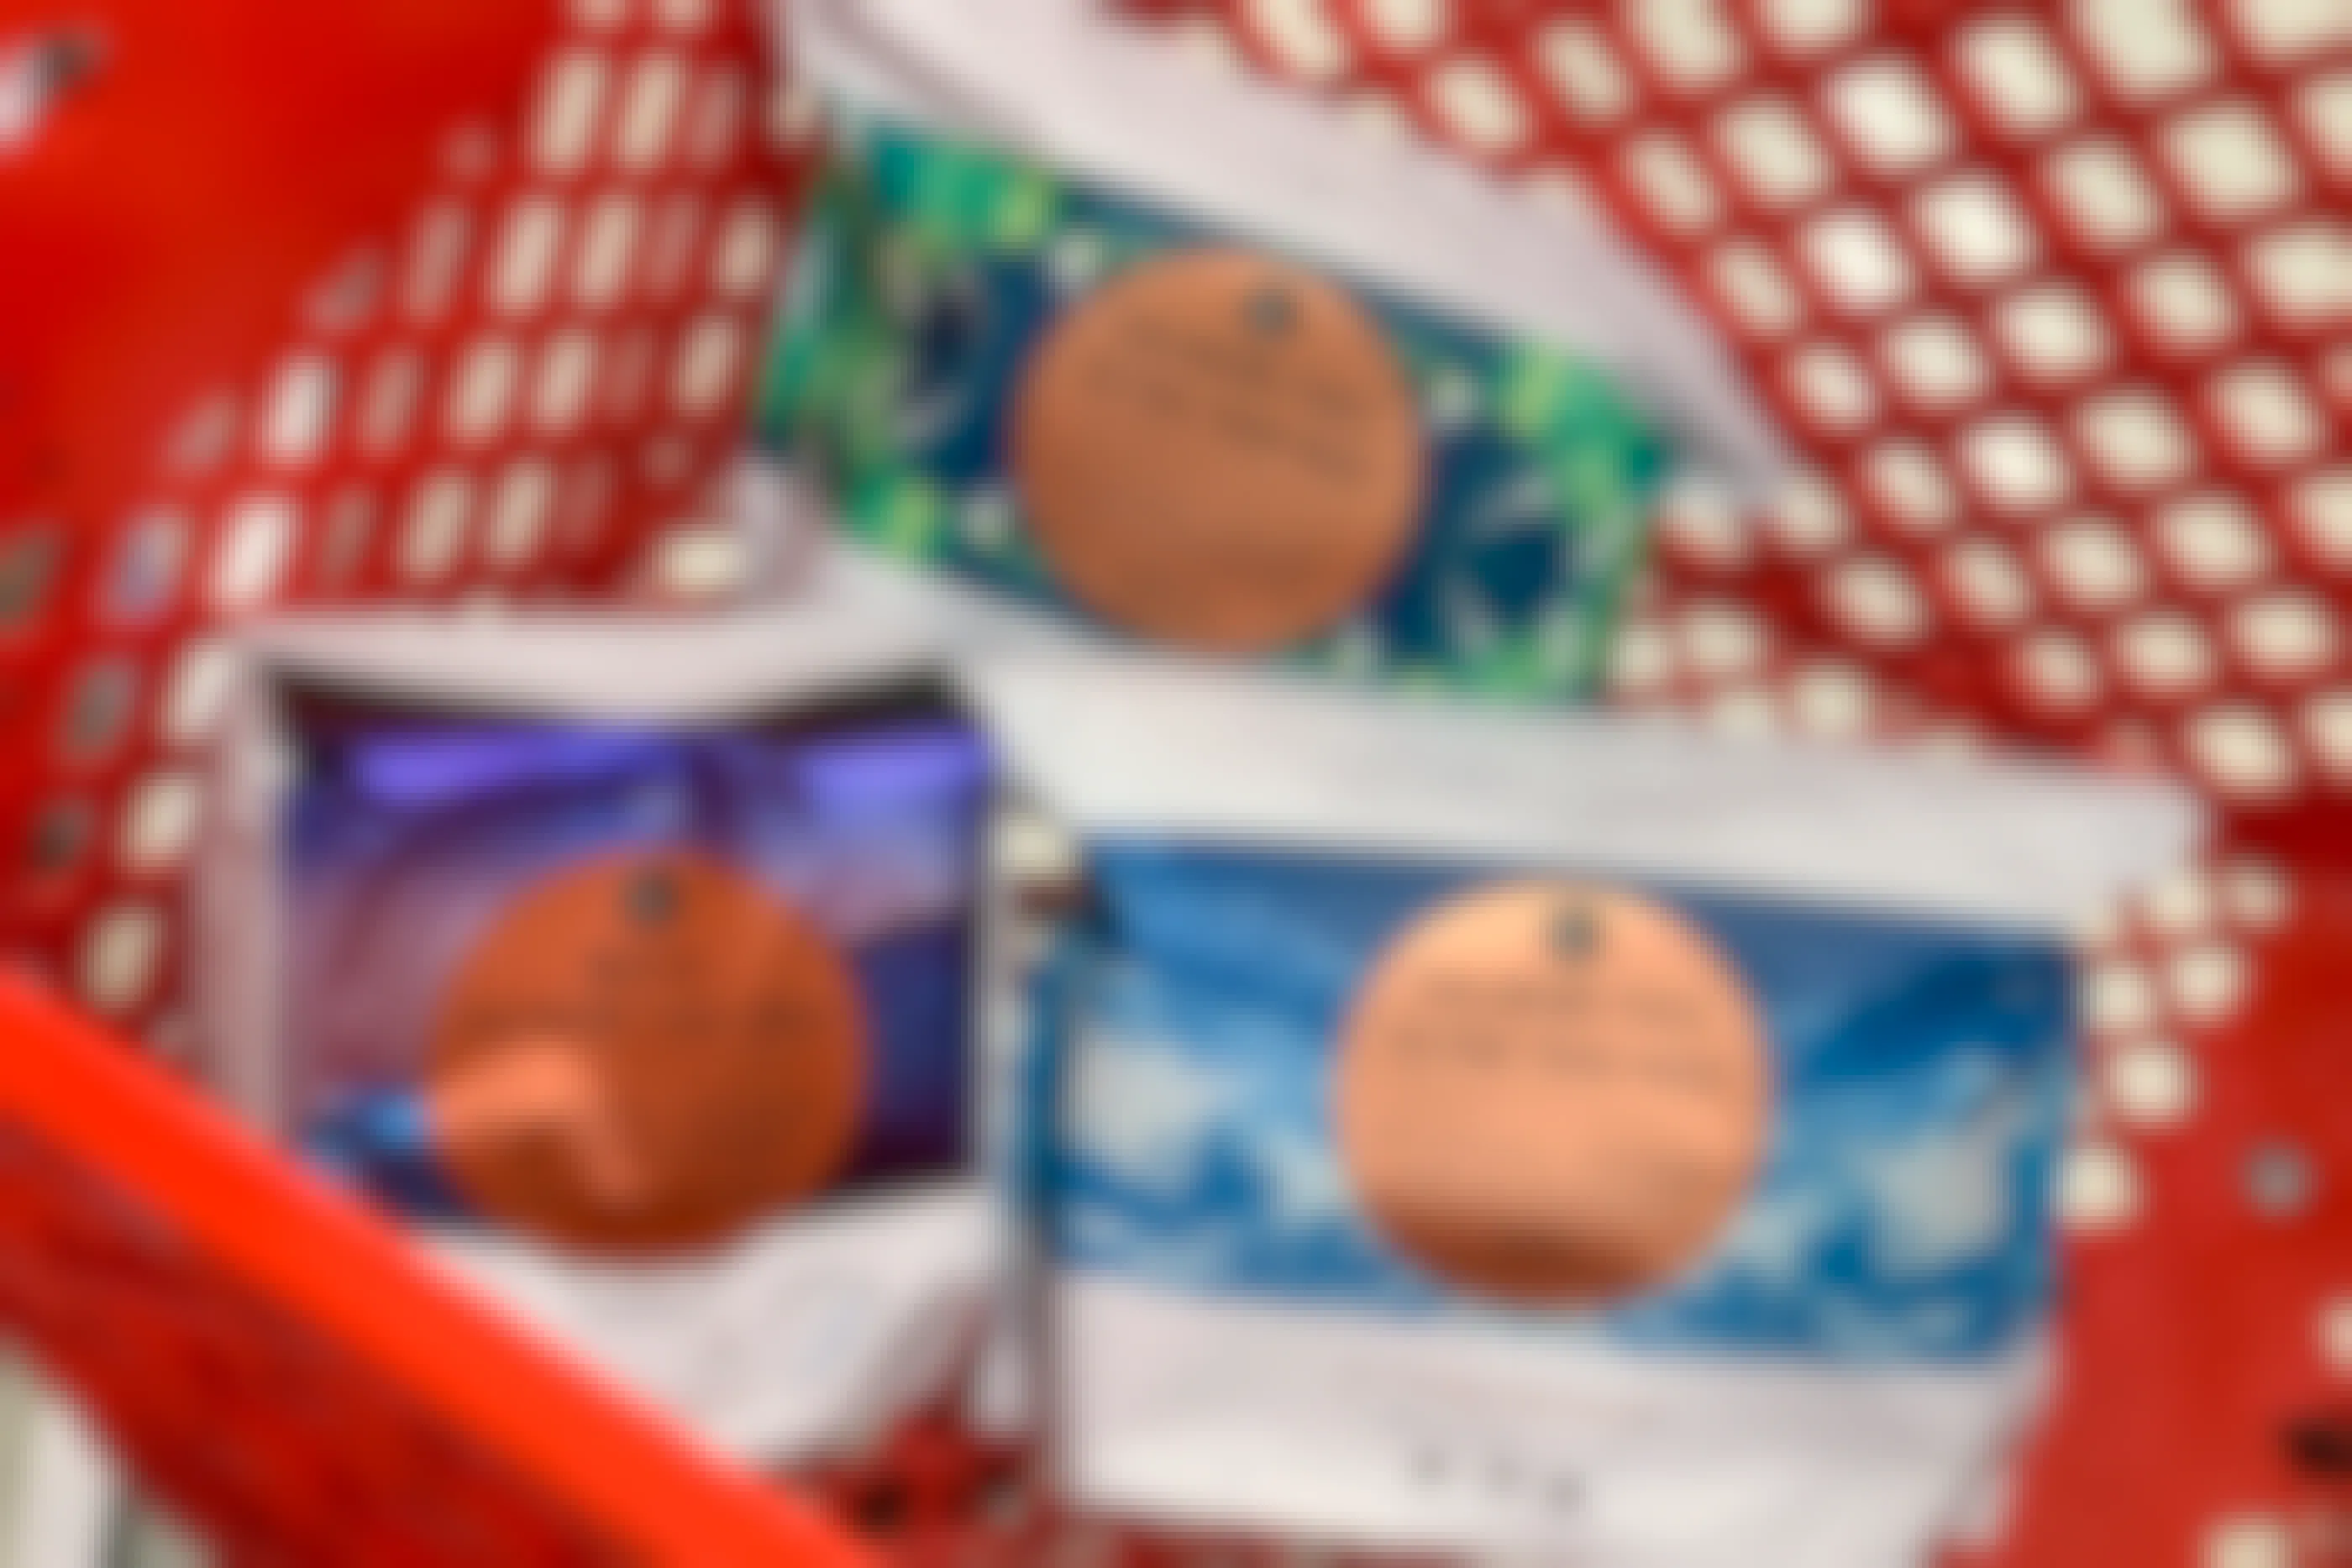 L. pads in target shopping cart